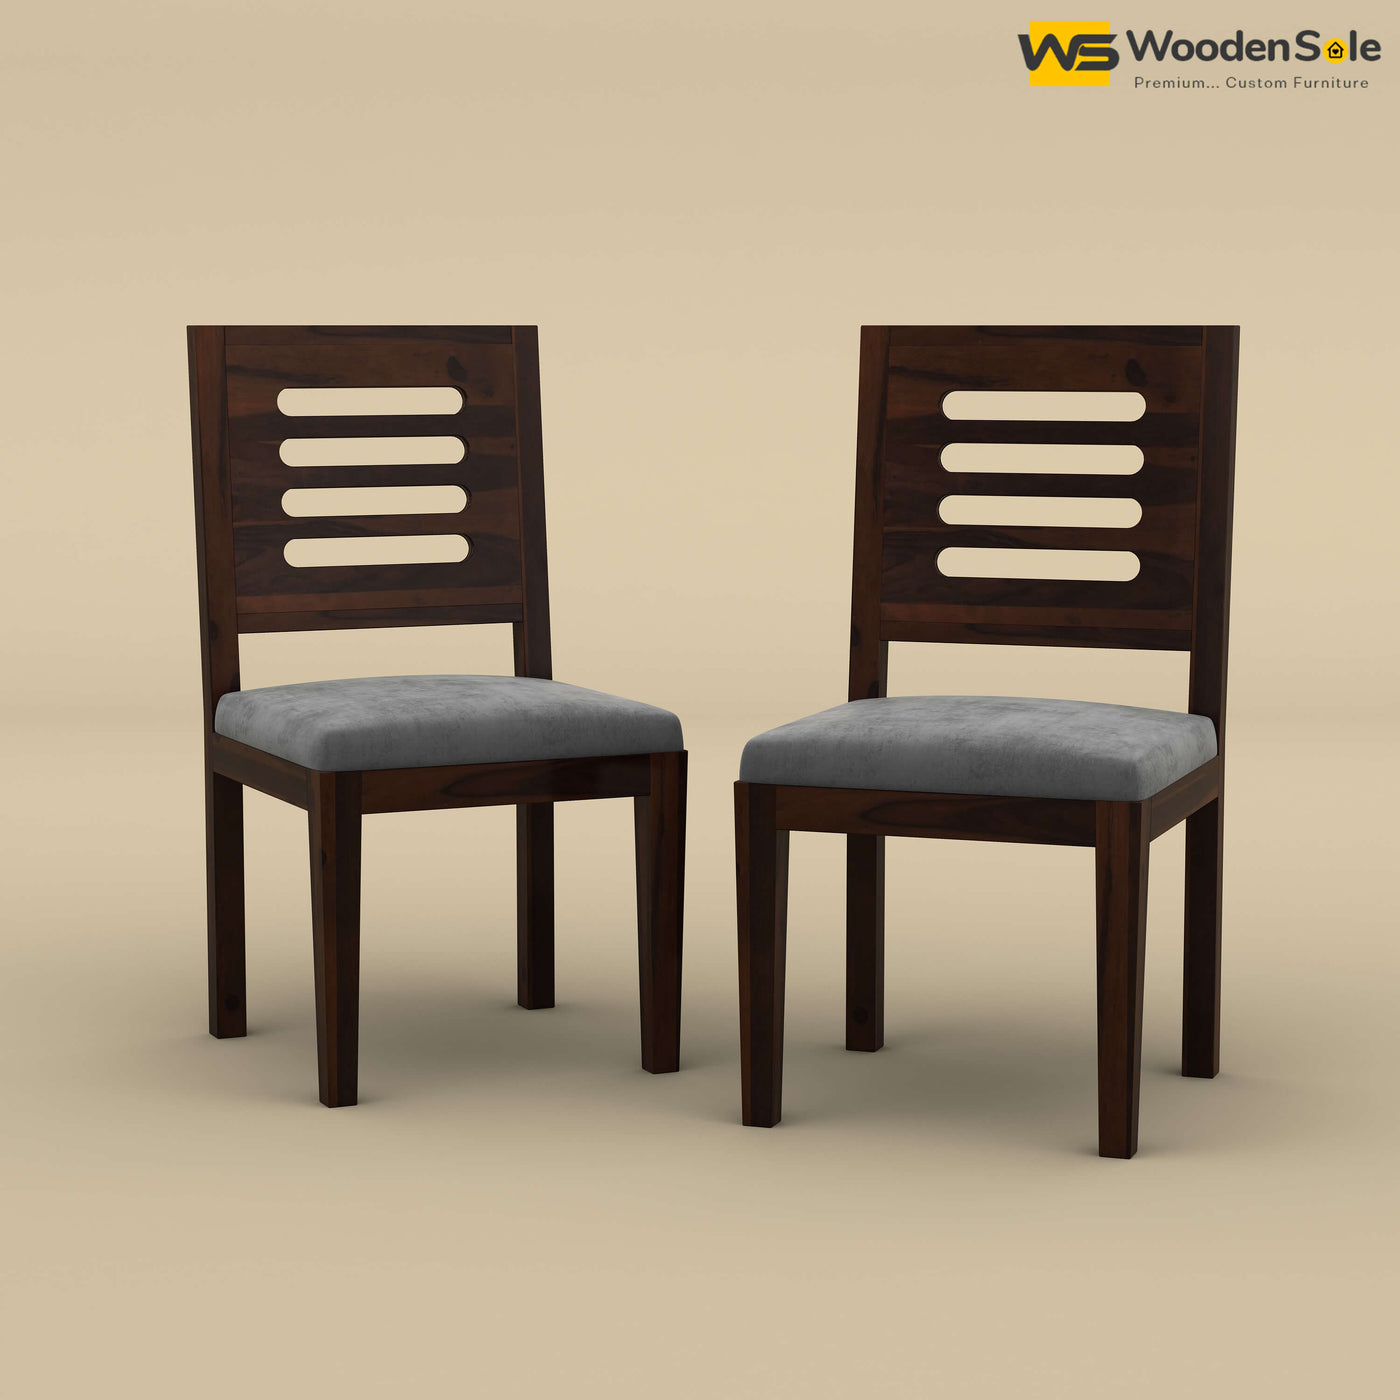 Sheesham Wood Dining Chair with Cushion - Set of 2 (Walnut Finish)